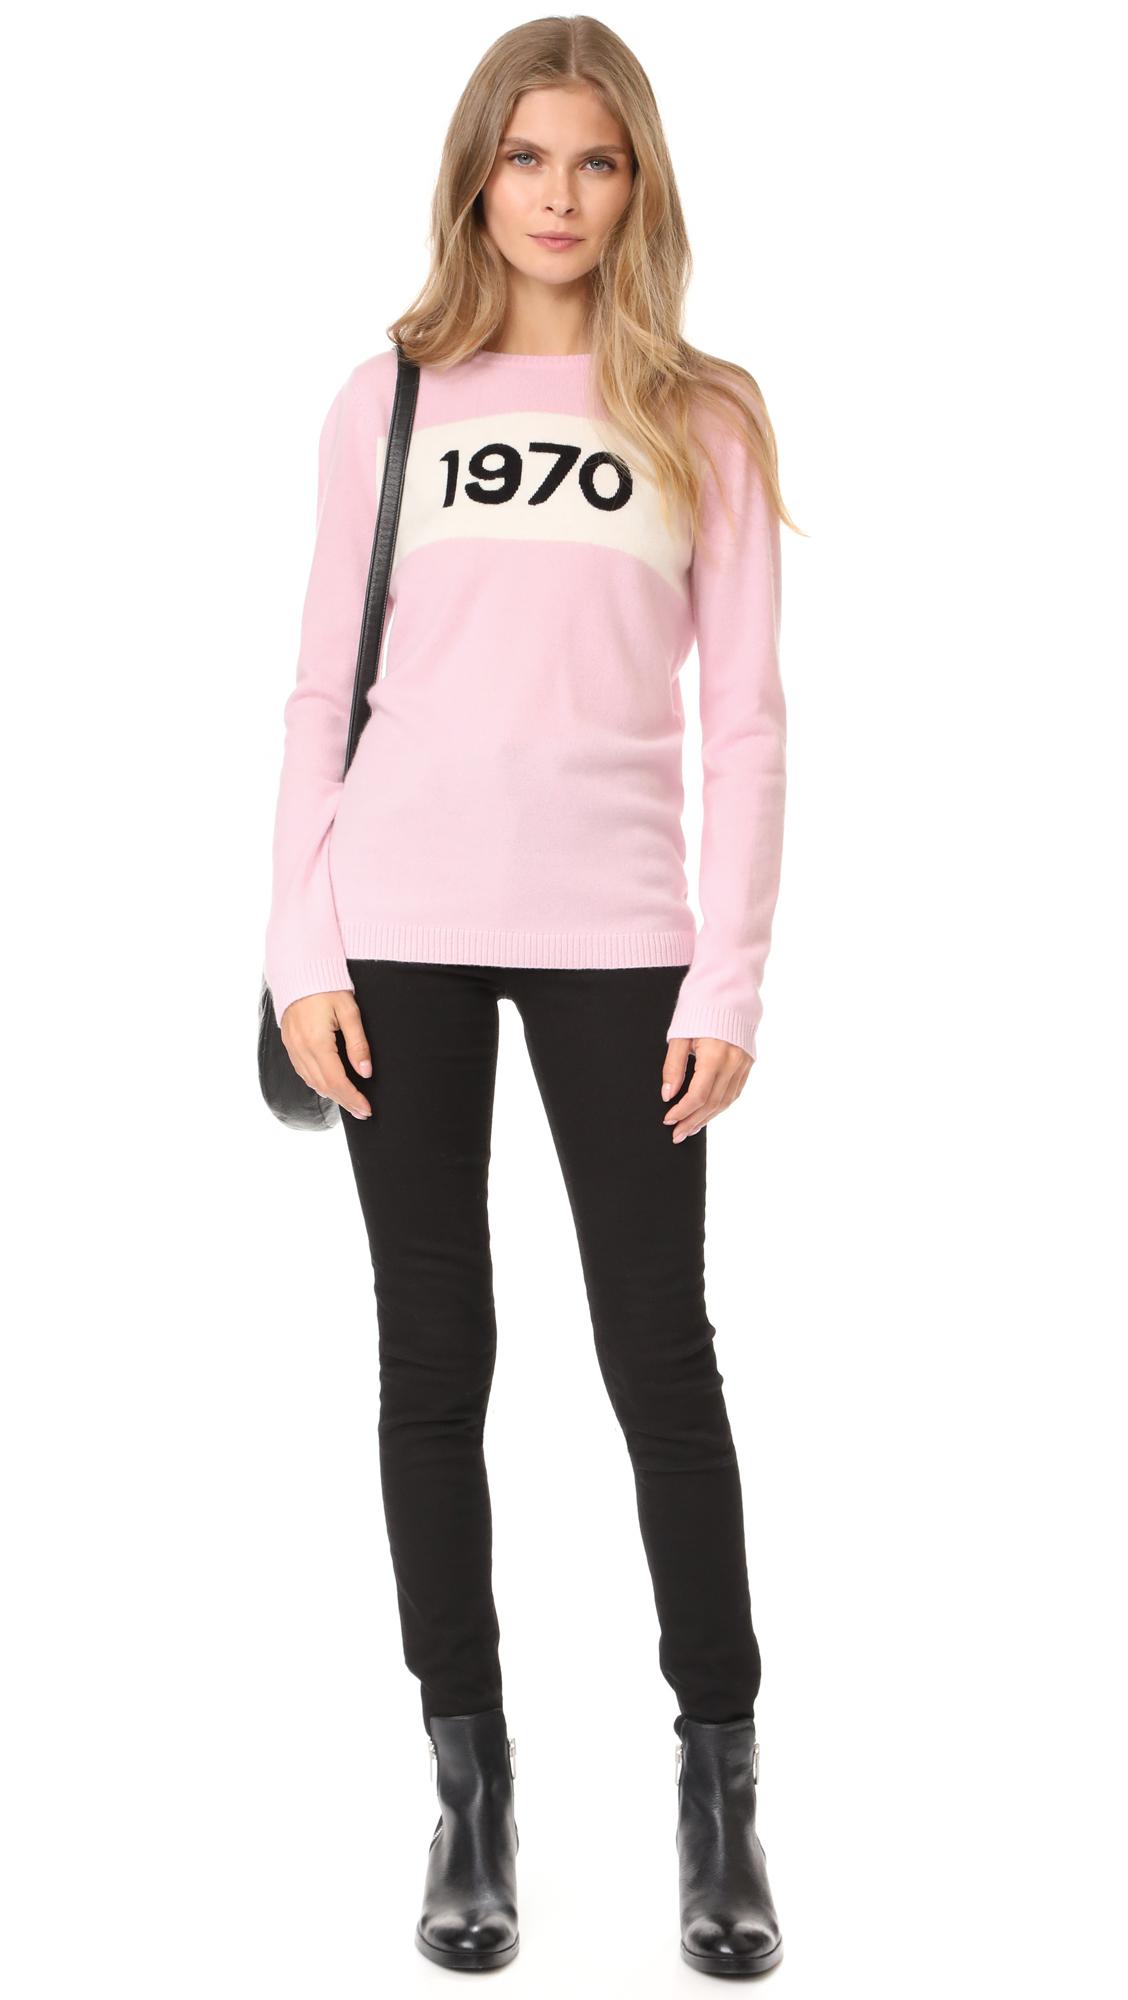 Lyst - Bella Freud Cashmere 1970 Sweater in Pink